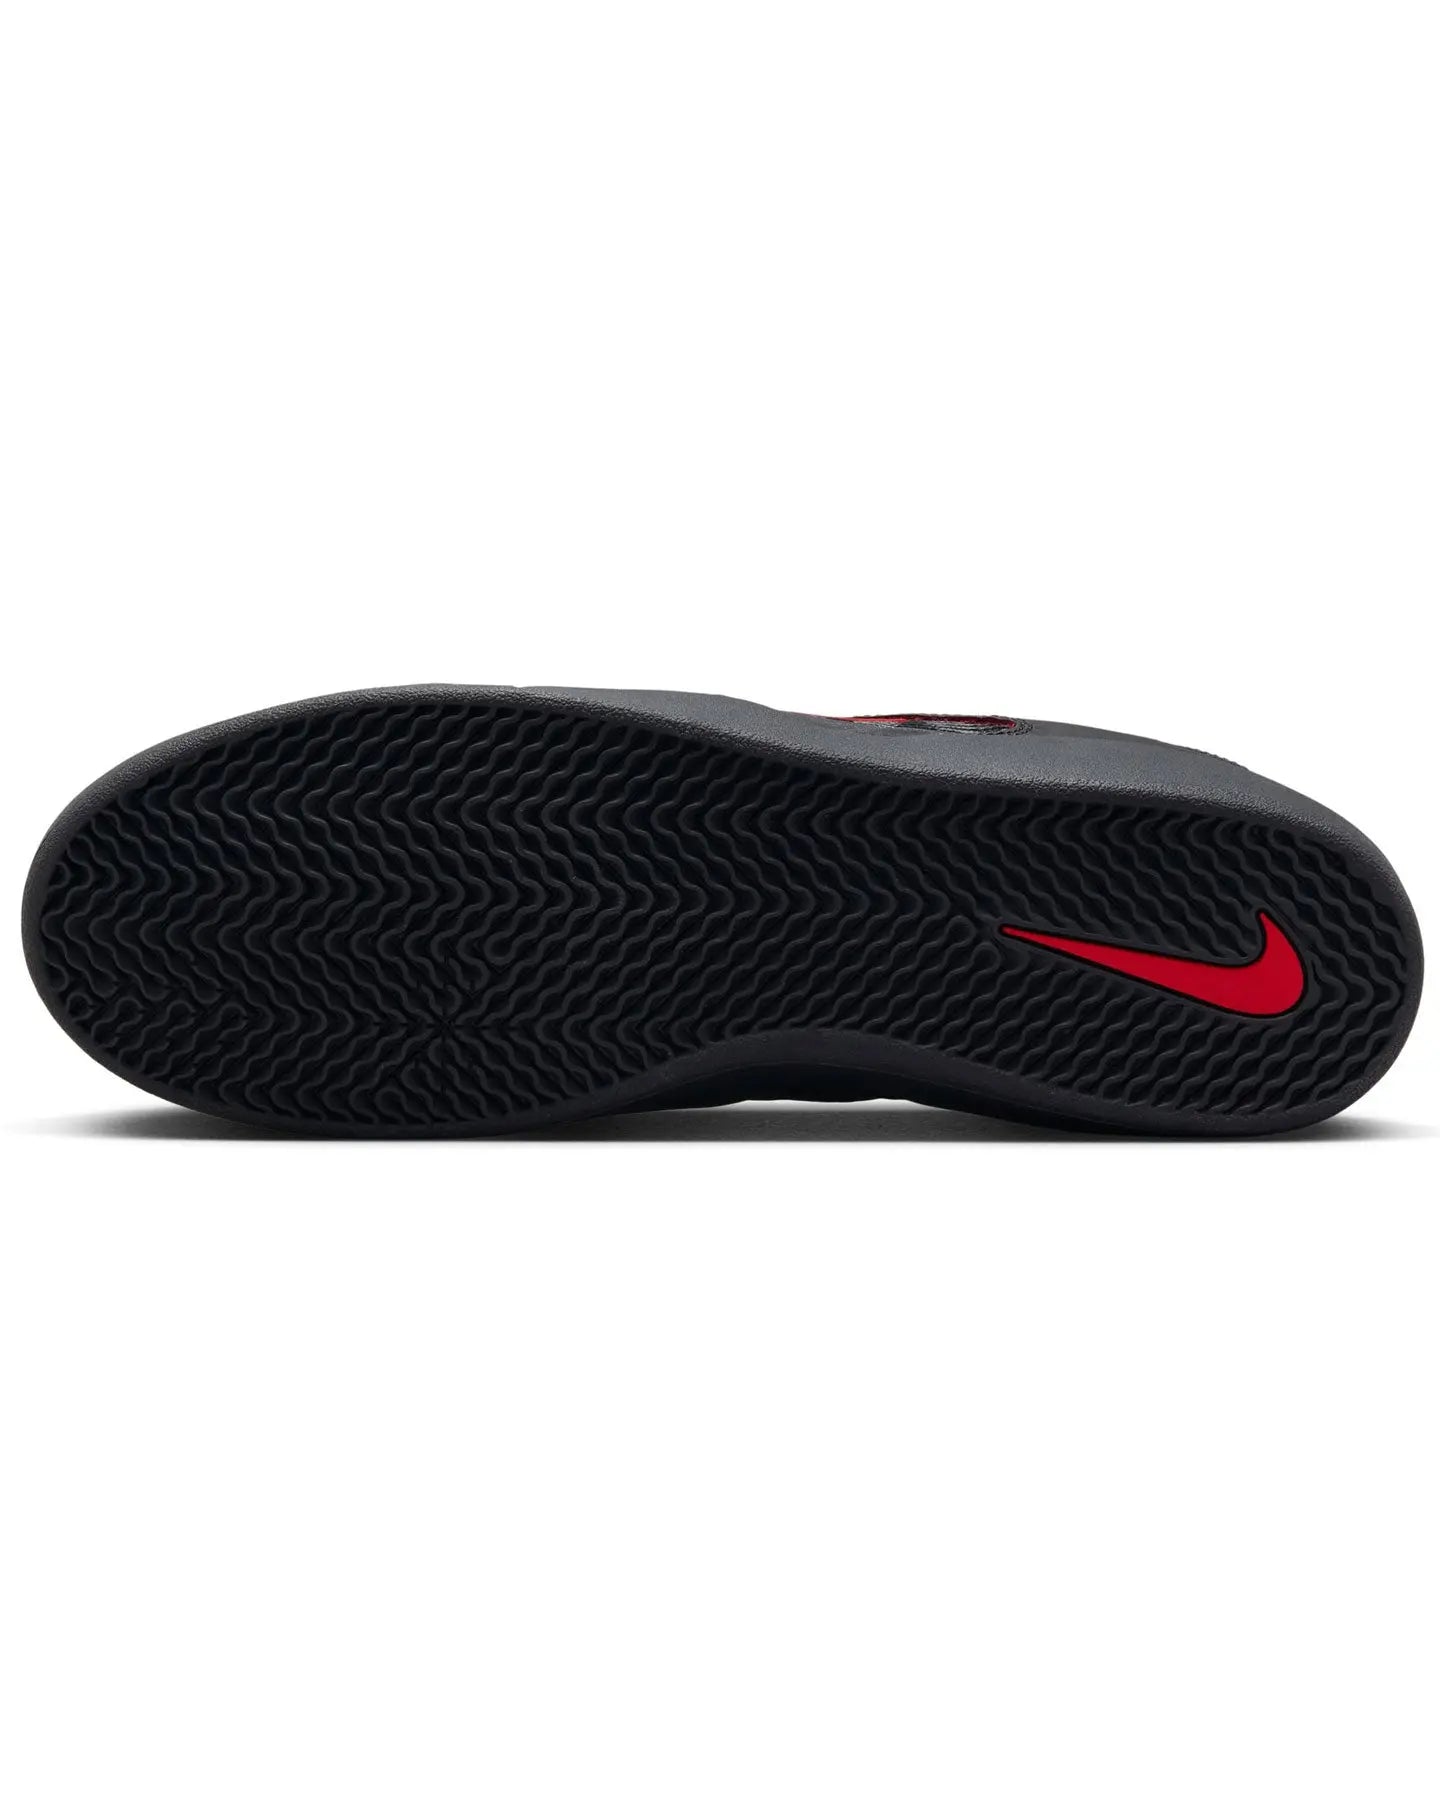 Nike SB Ishod PRM - Black / University Red / Black Footwear